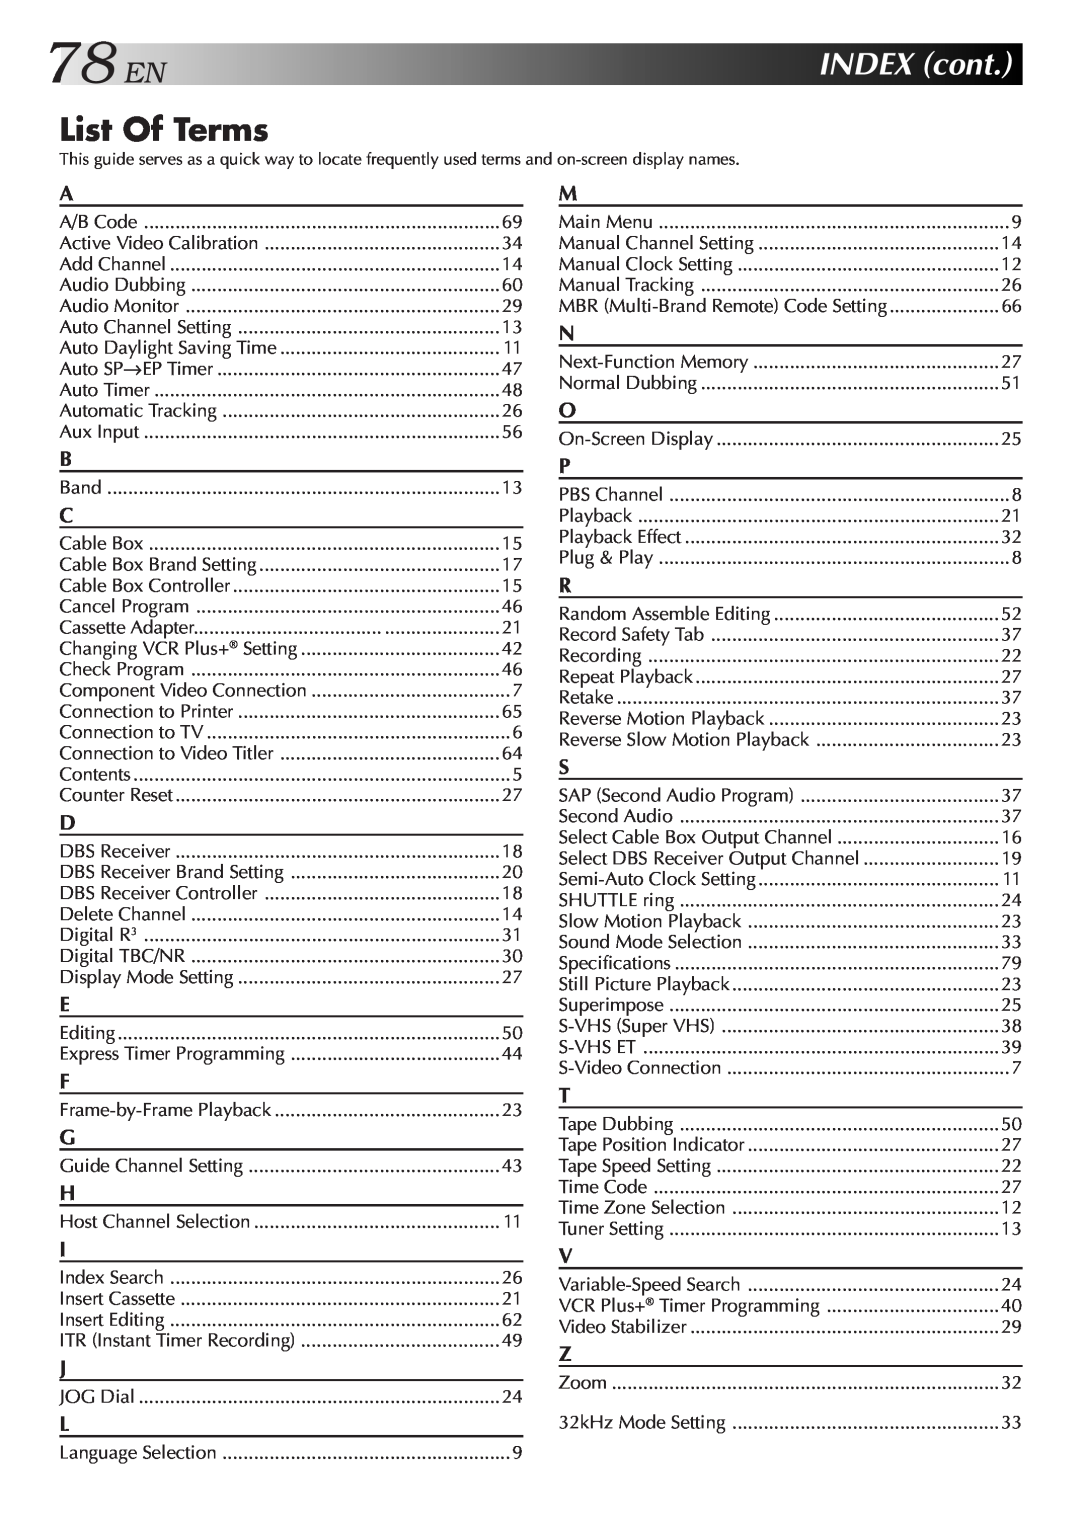 JVC Model HR-DVS1U manual 78EN, List Of Terms, INDEXcont 